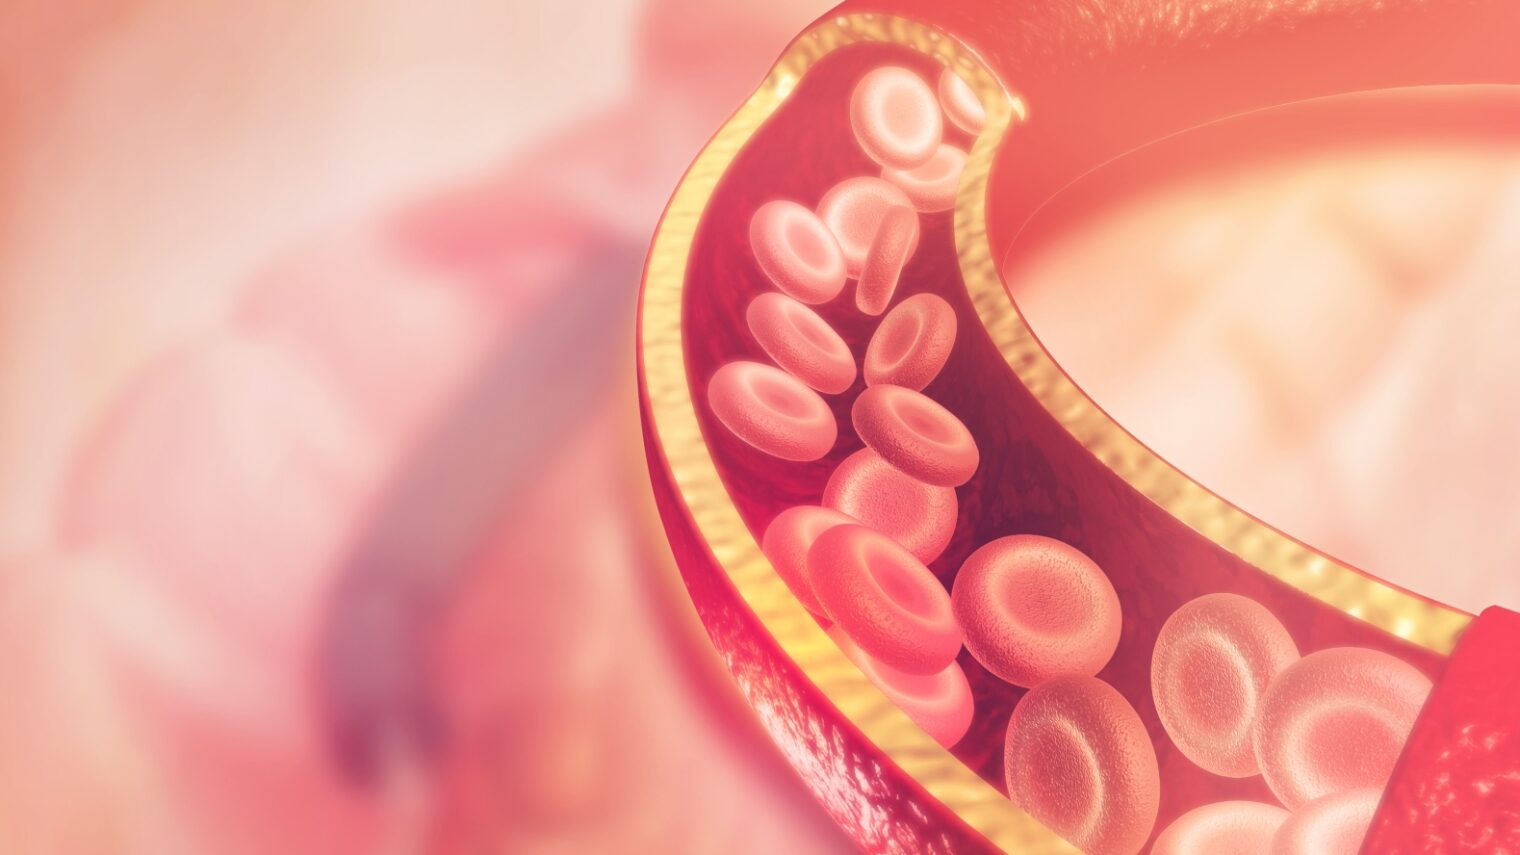 Illustration of blood cells in an artery via Shutterstock.com